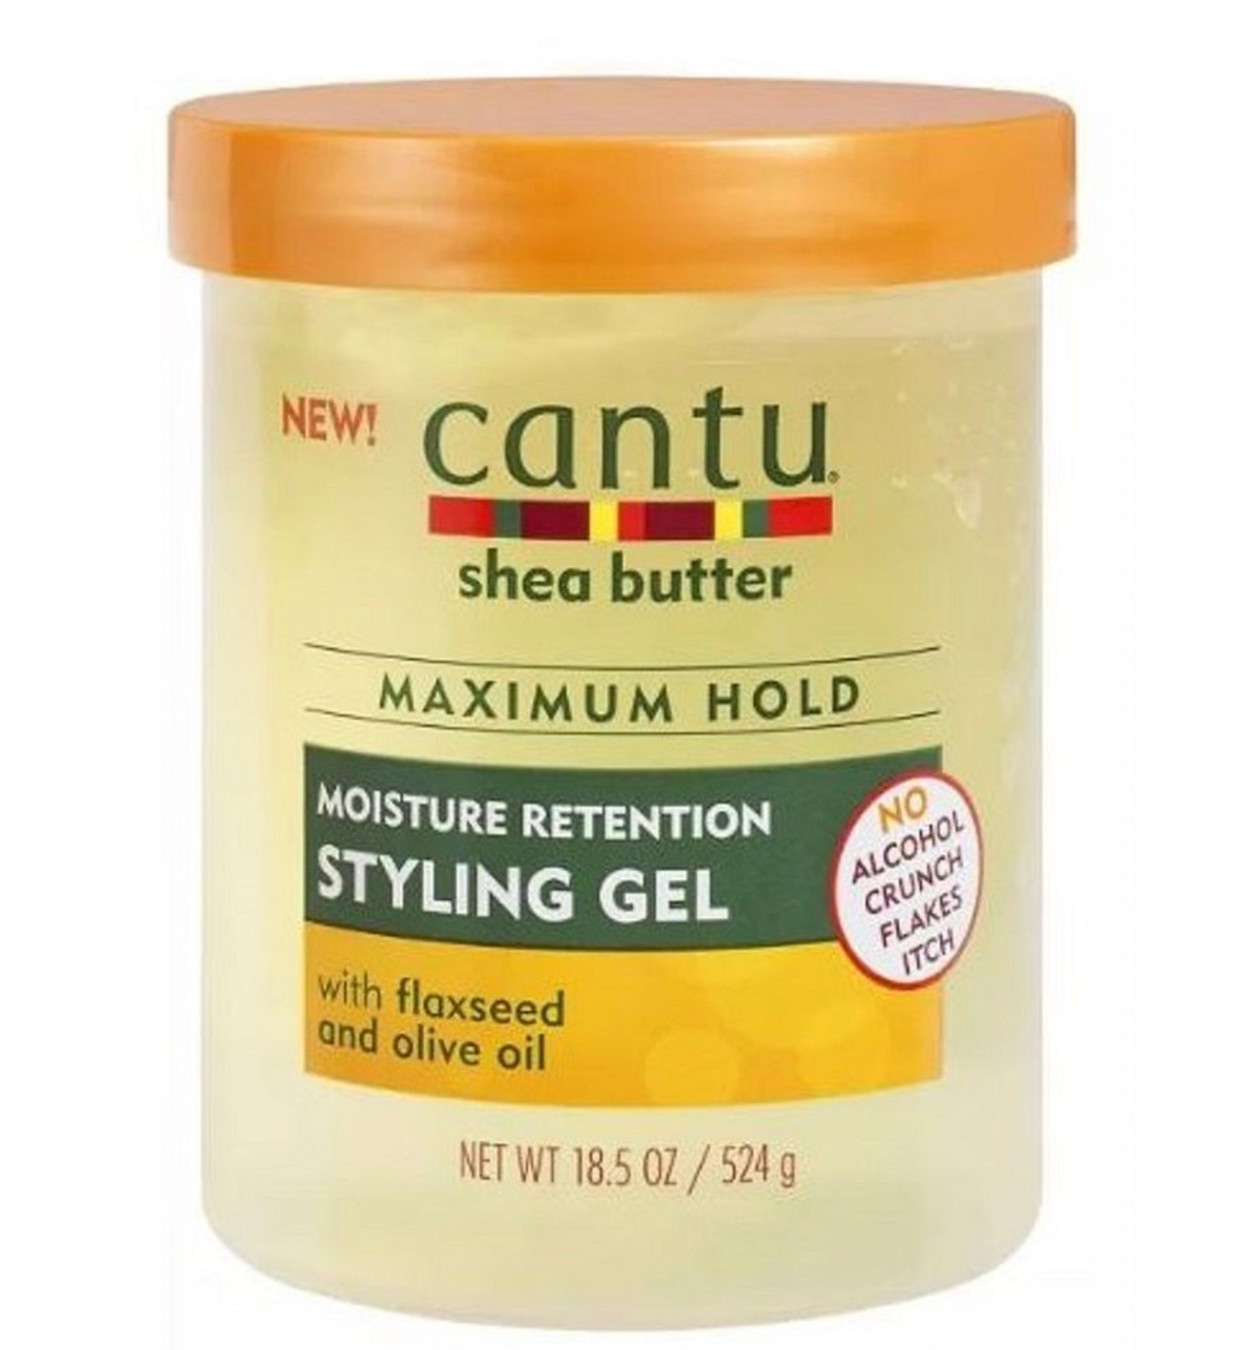 Cantu Shea Butter for Natural Hair Maximum Hold Moisture Retention Styling Gel